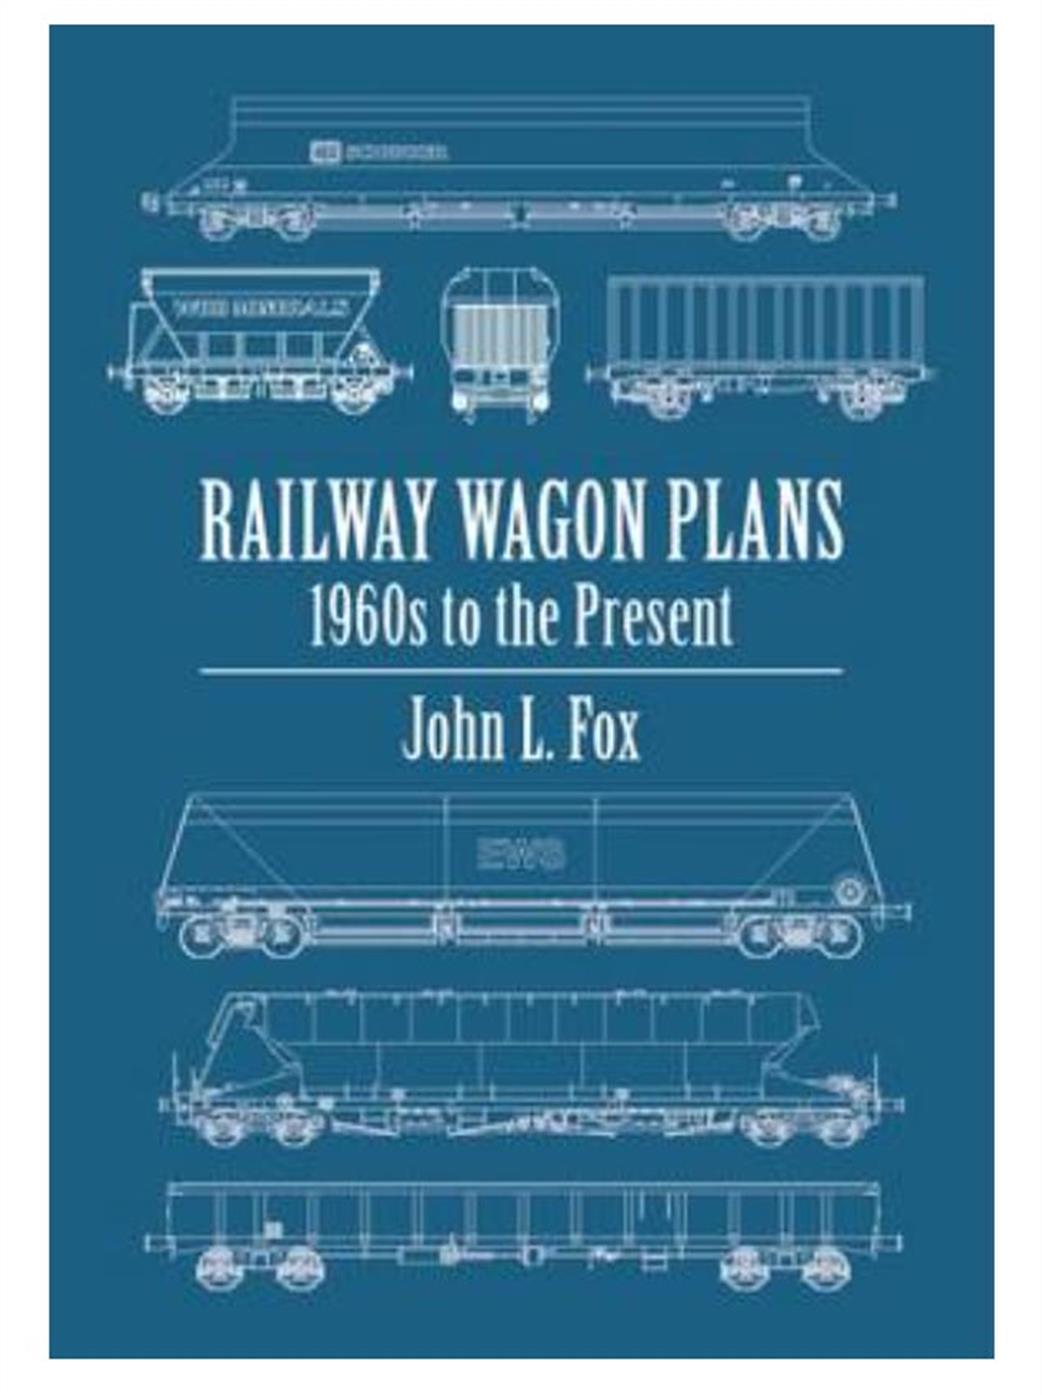 Ian Allan Publishing  9780711038431 Railway Wagon Plans 1960s to present Book by John L Fox